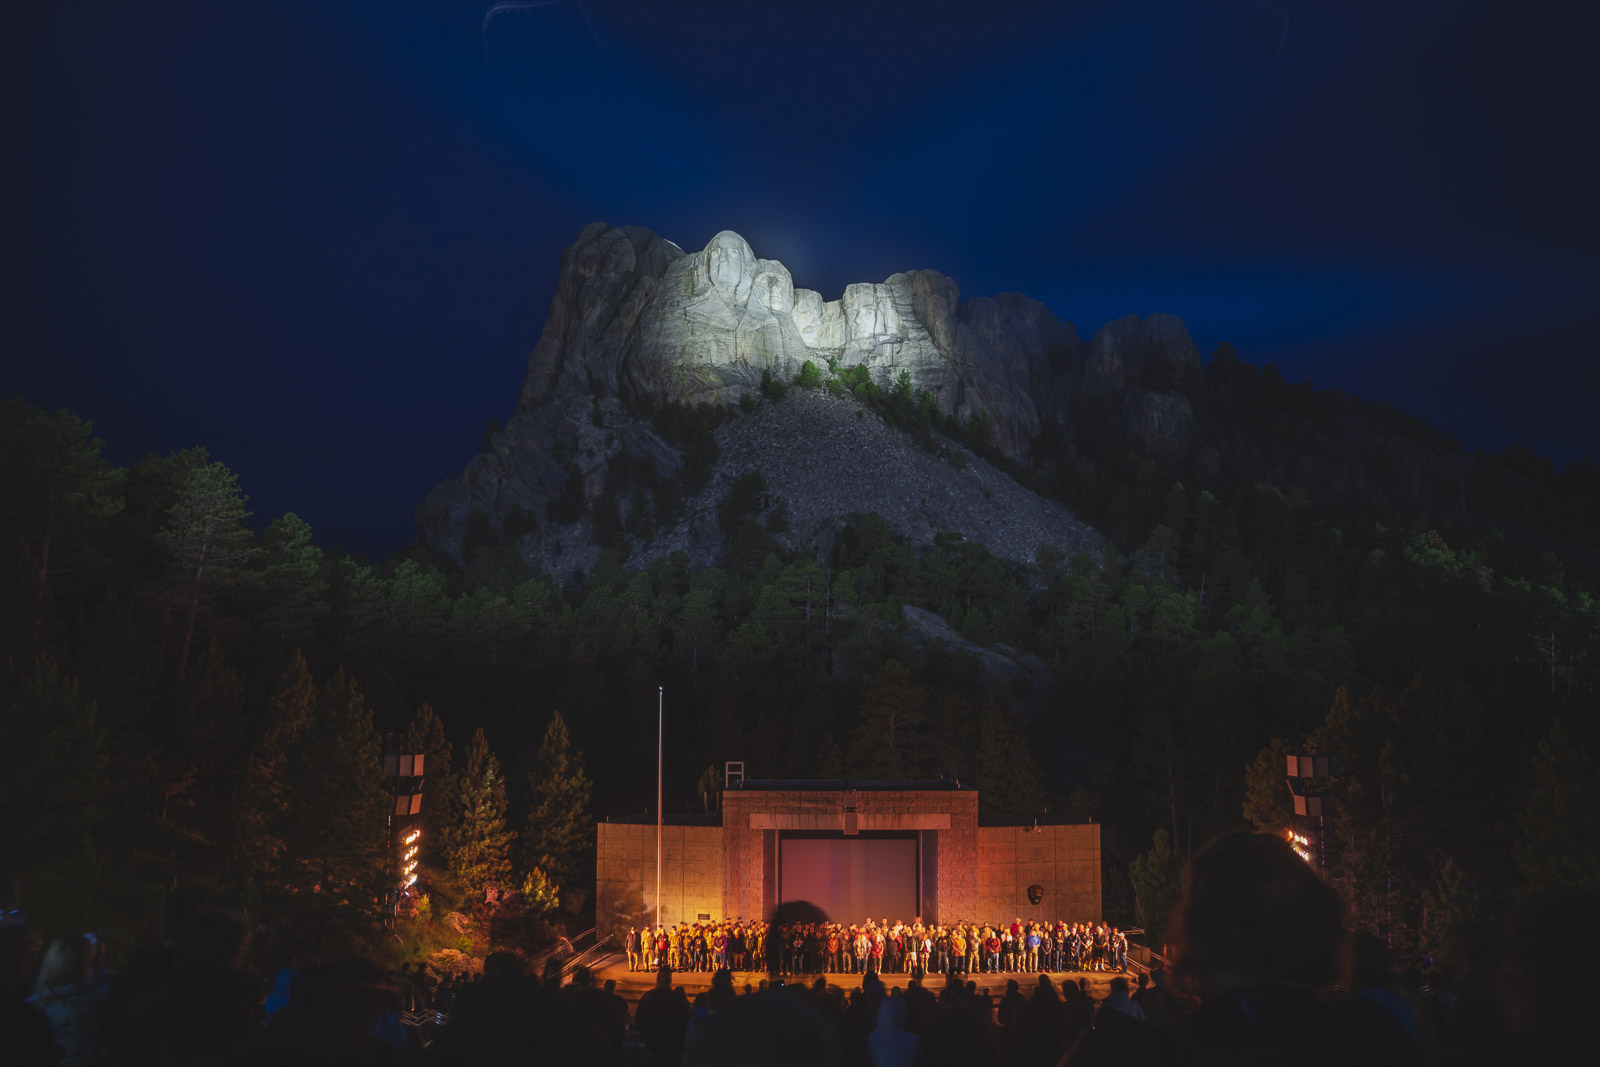 Lighting Ceremony at Mount Rushmore in South Dakota